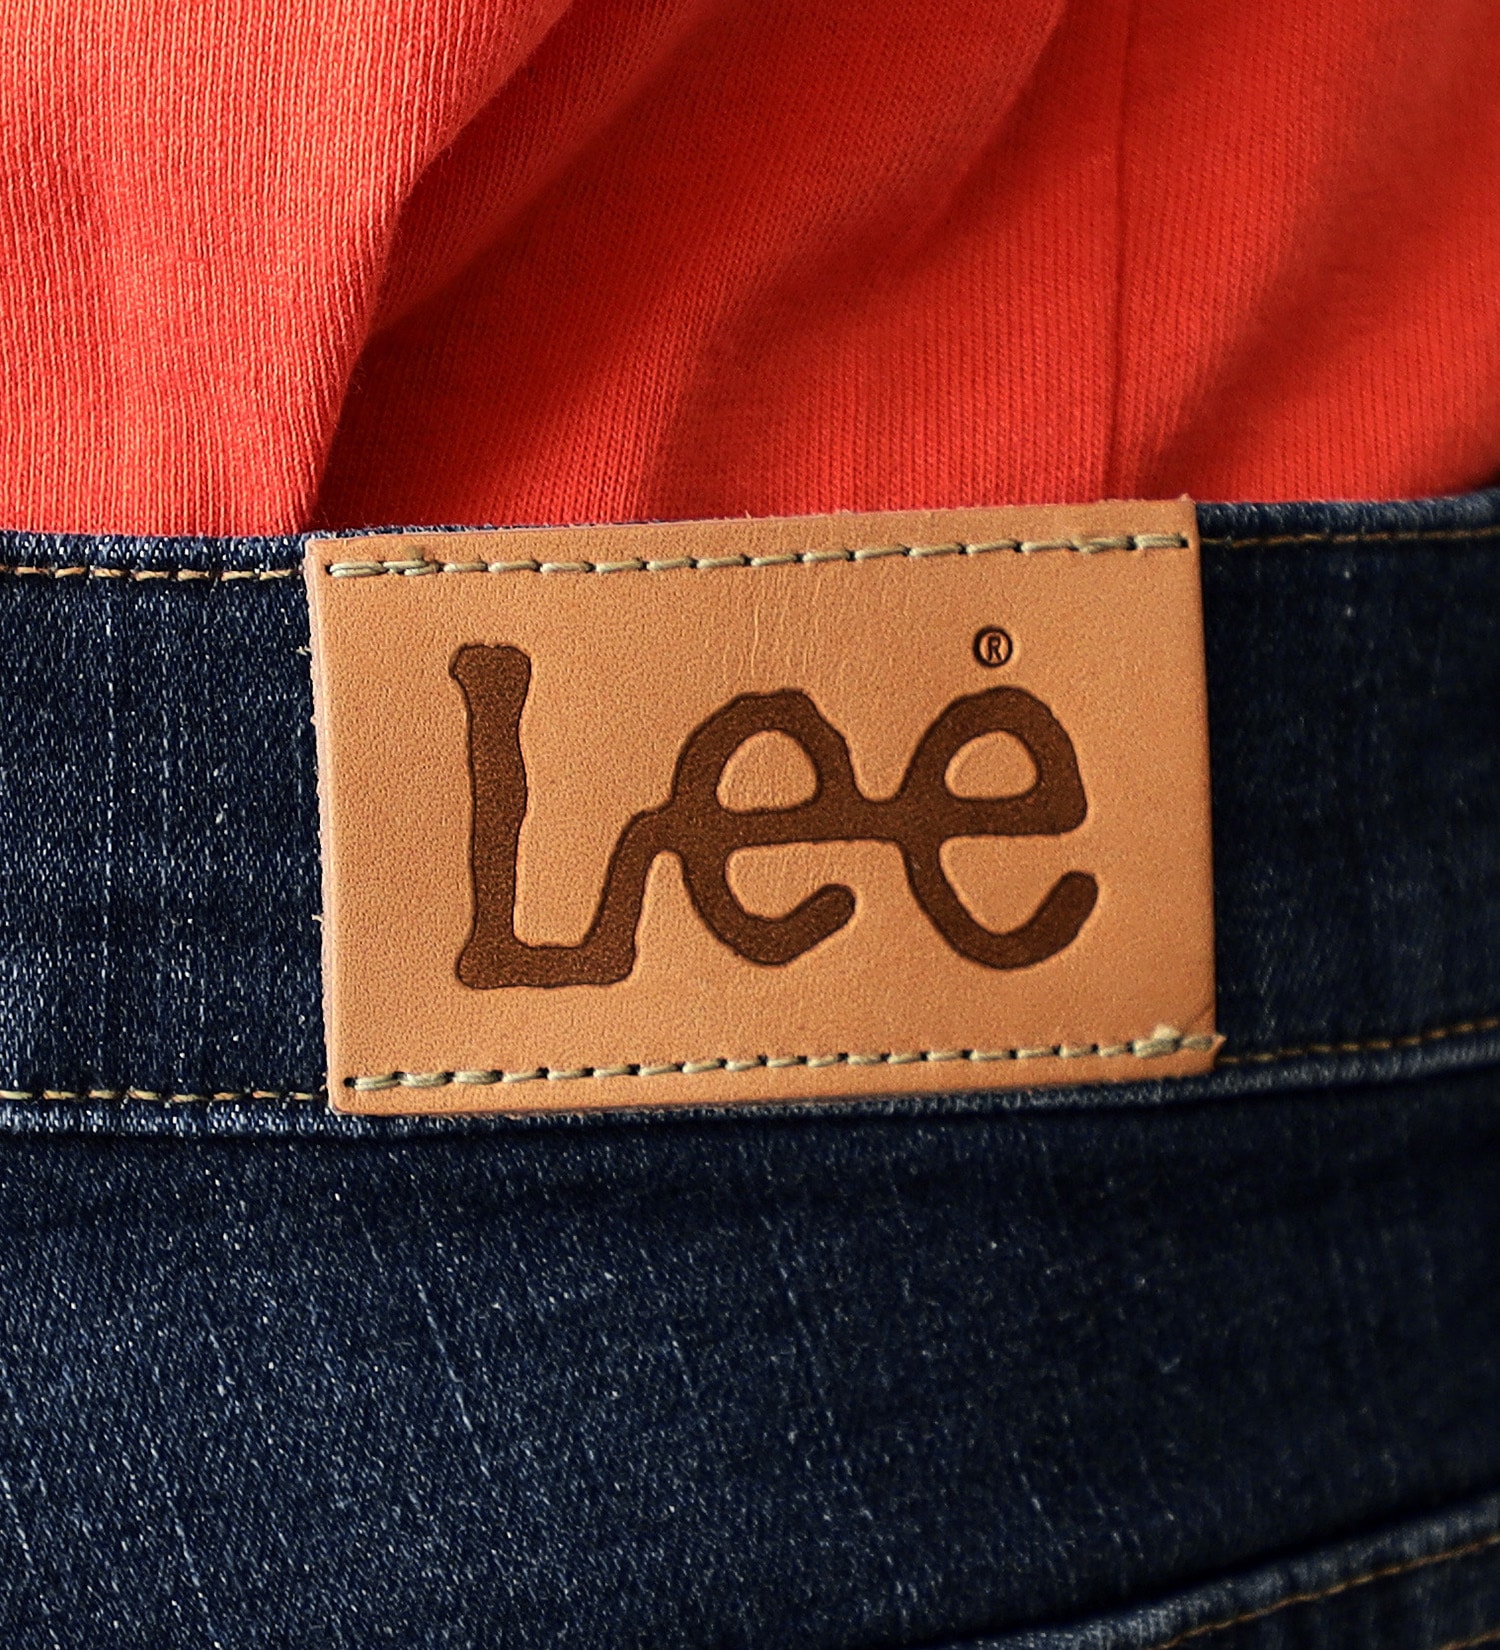 Lee(リー)の【超快適ストレッチ】すっきり細身スキニーパンツ|パンツ/デニムパンツ/メンズ|濃色ブルー